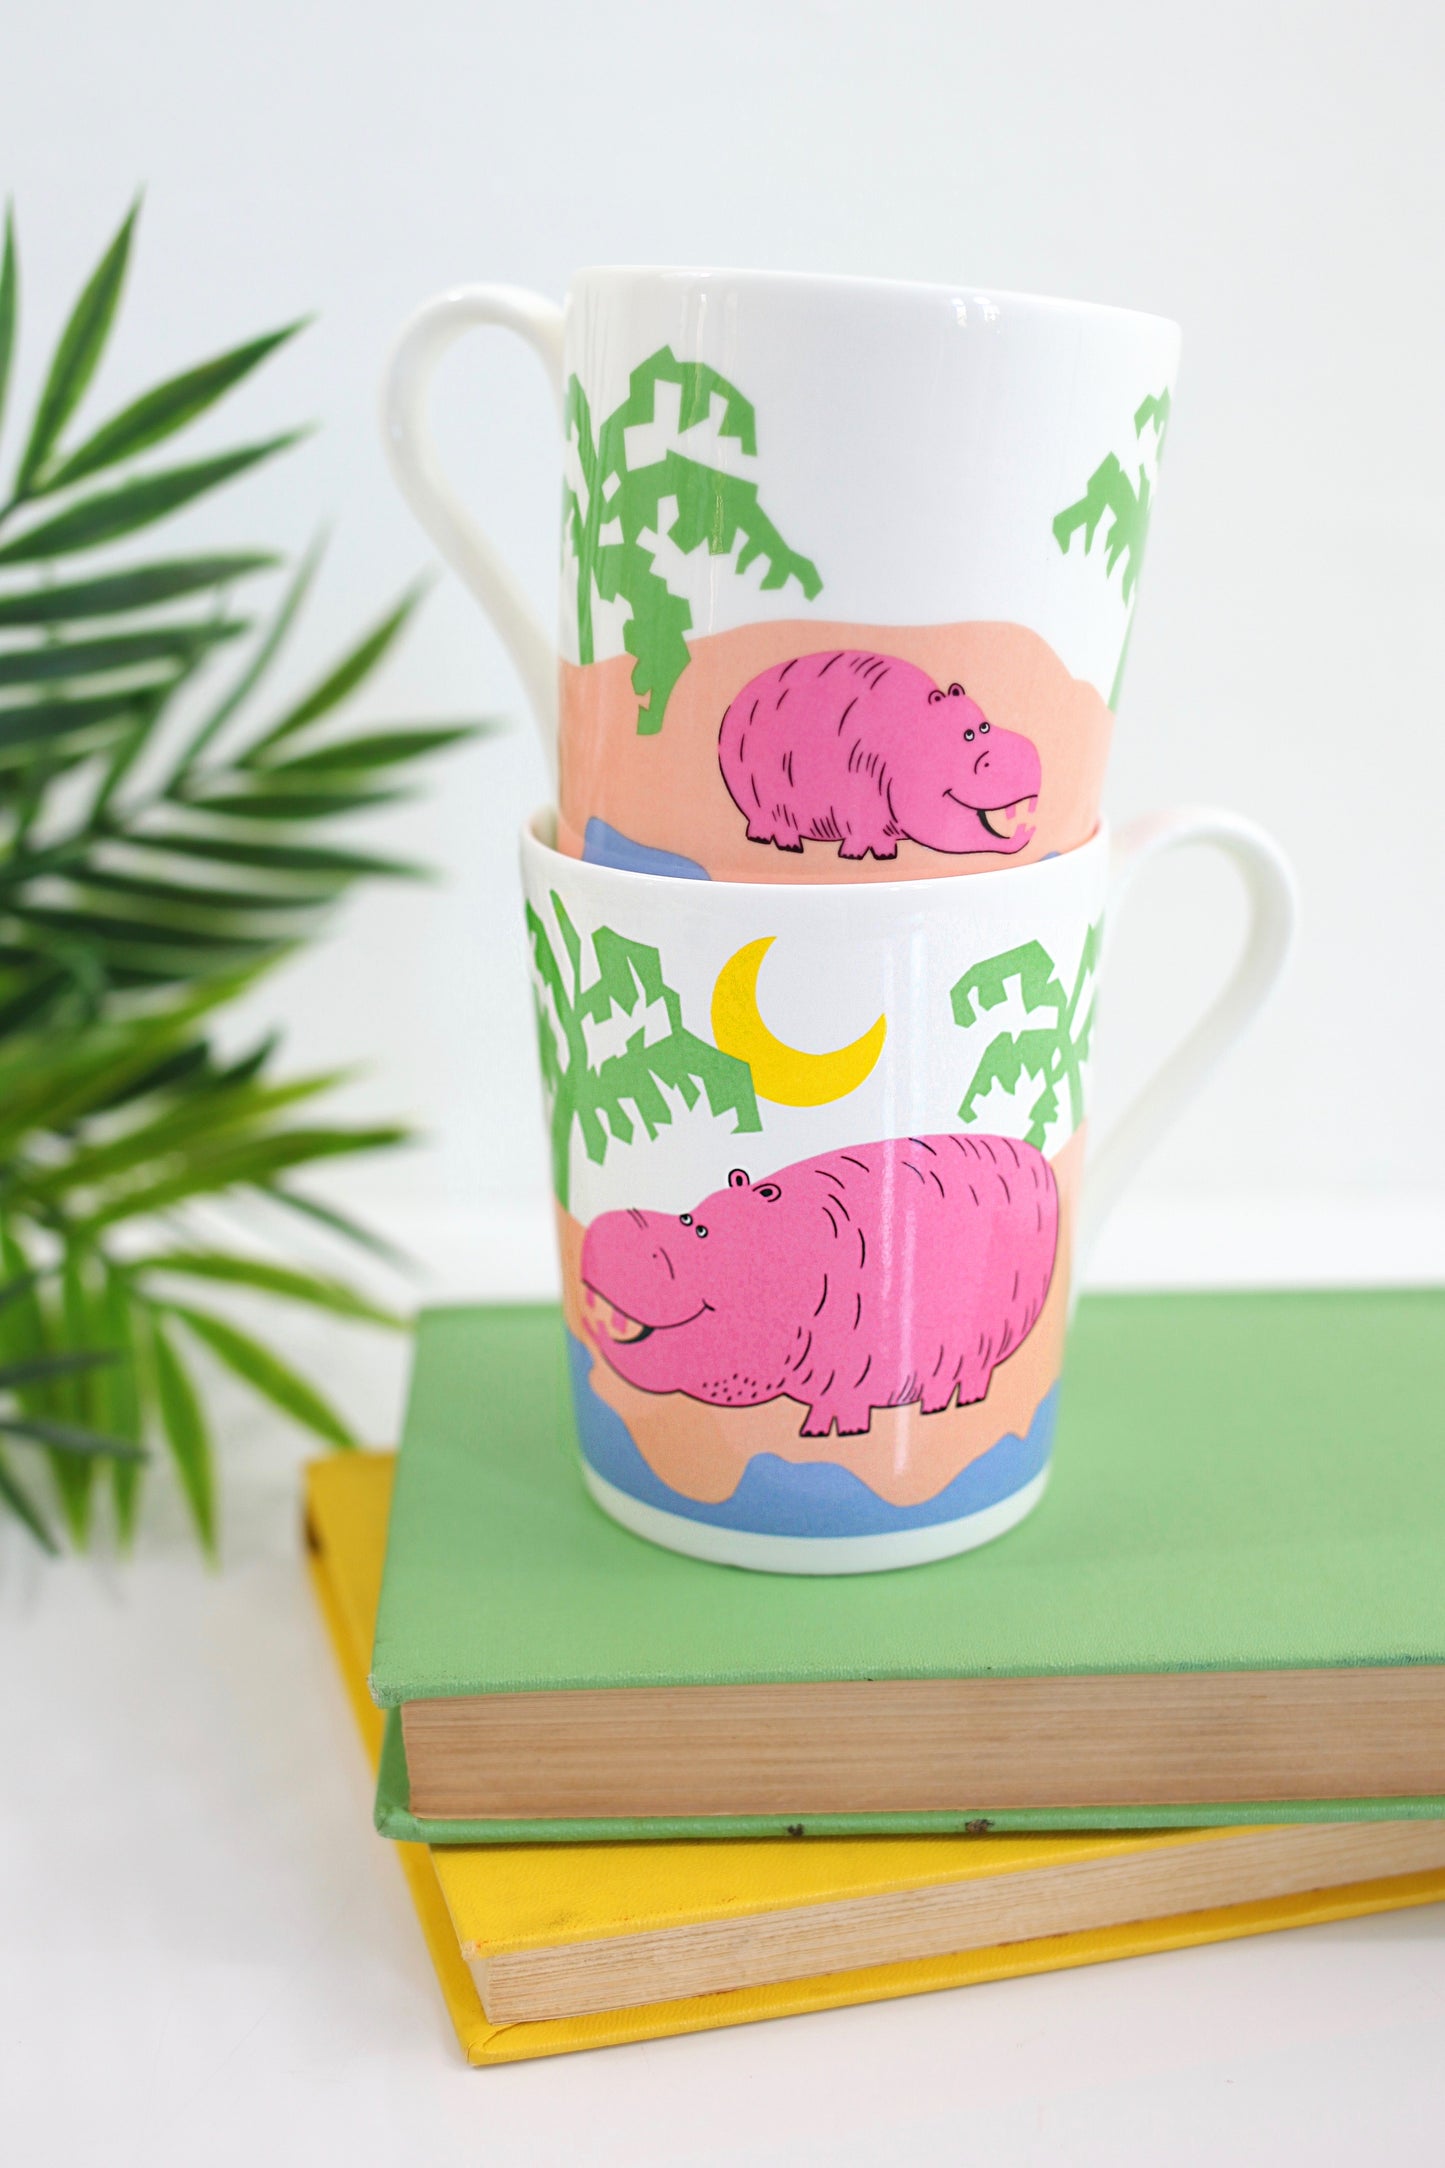 SOLD - Vintage Pink Hippo Mugs by Studio Nova